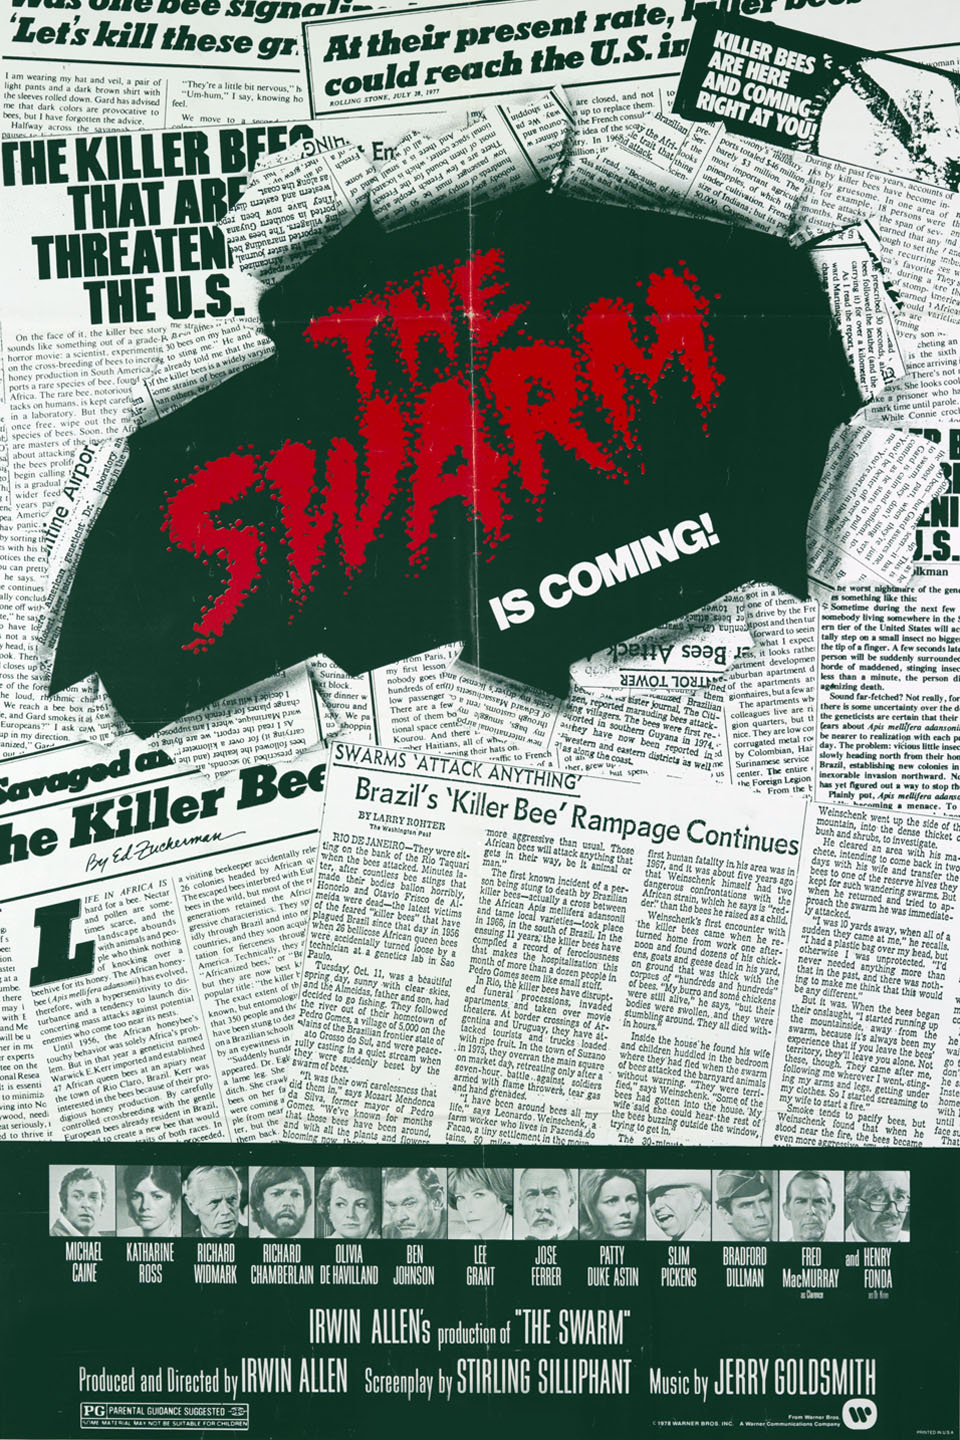 Swarm the The Swarm